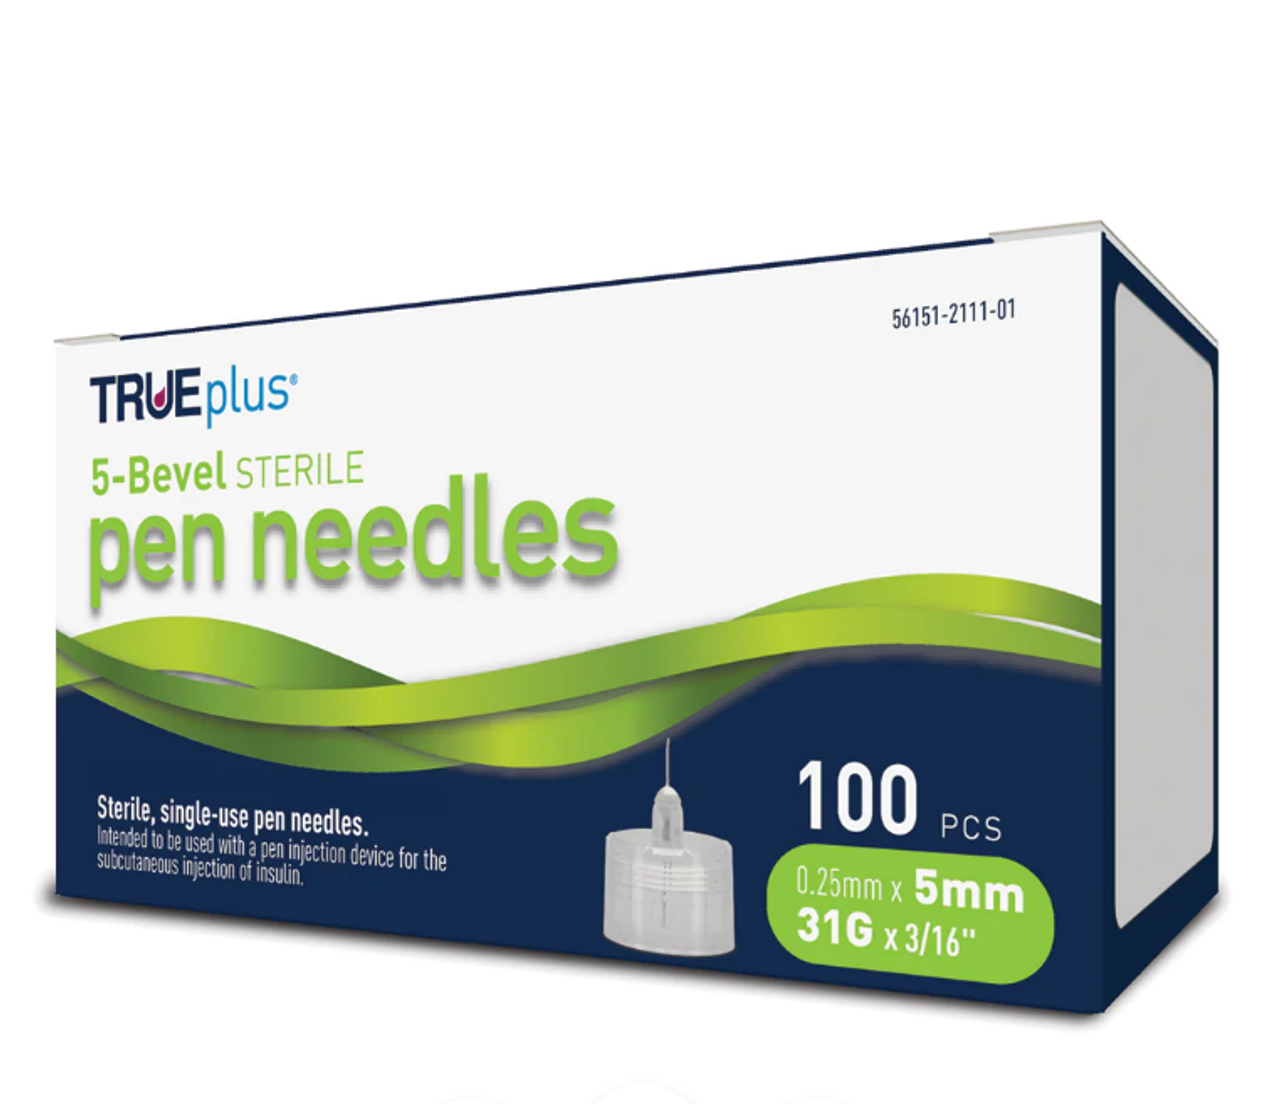 Trividia Health TRUEplus 5-Bevel Sterile, Single-Use Pen Needles, 31G, 5mm (1/4 inch) - 2 Pack